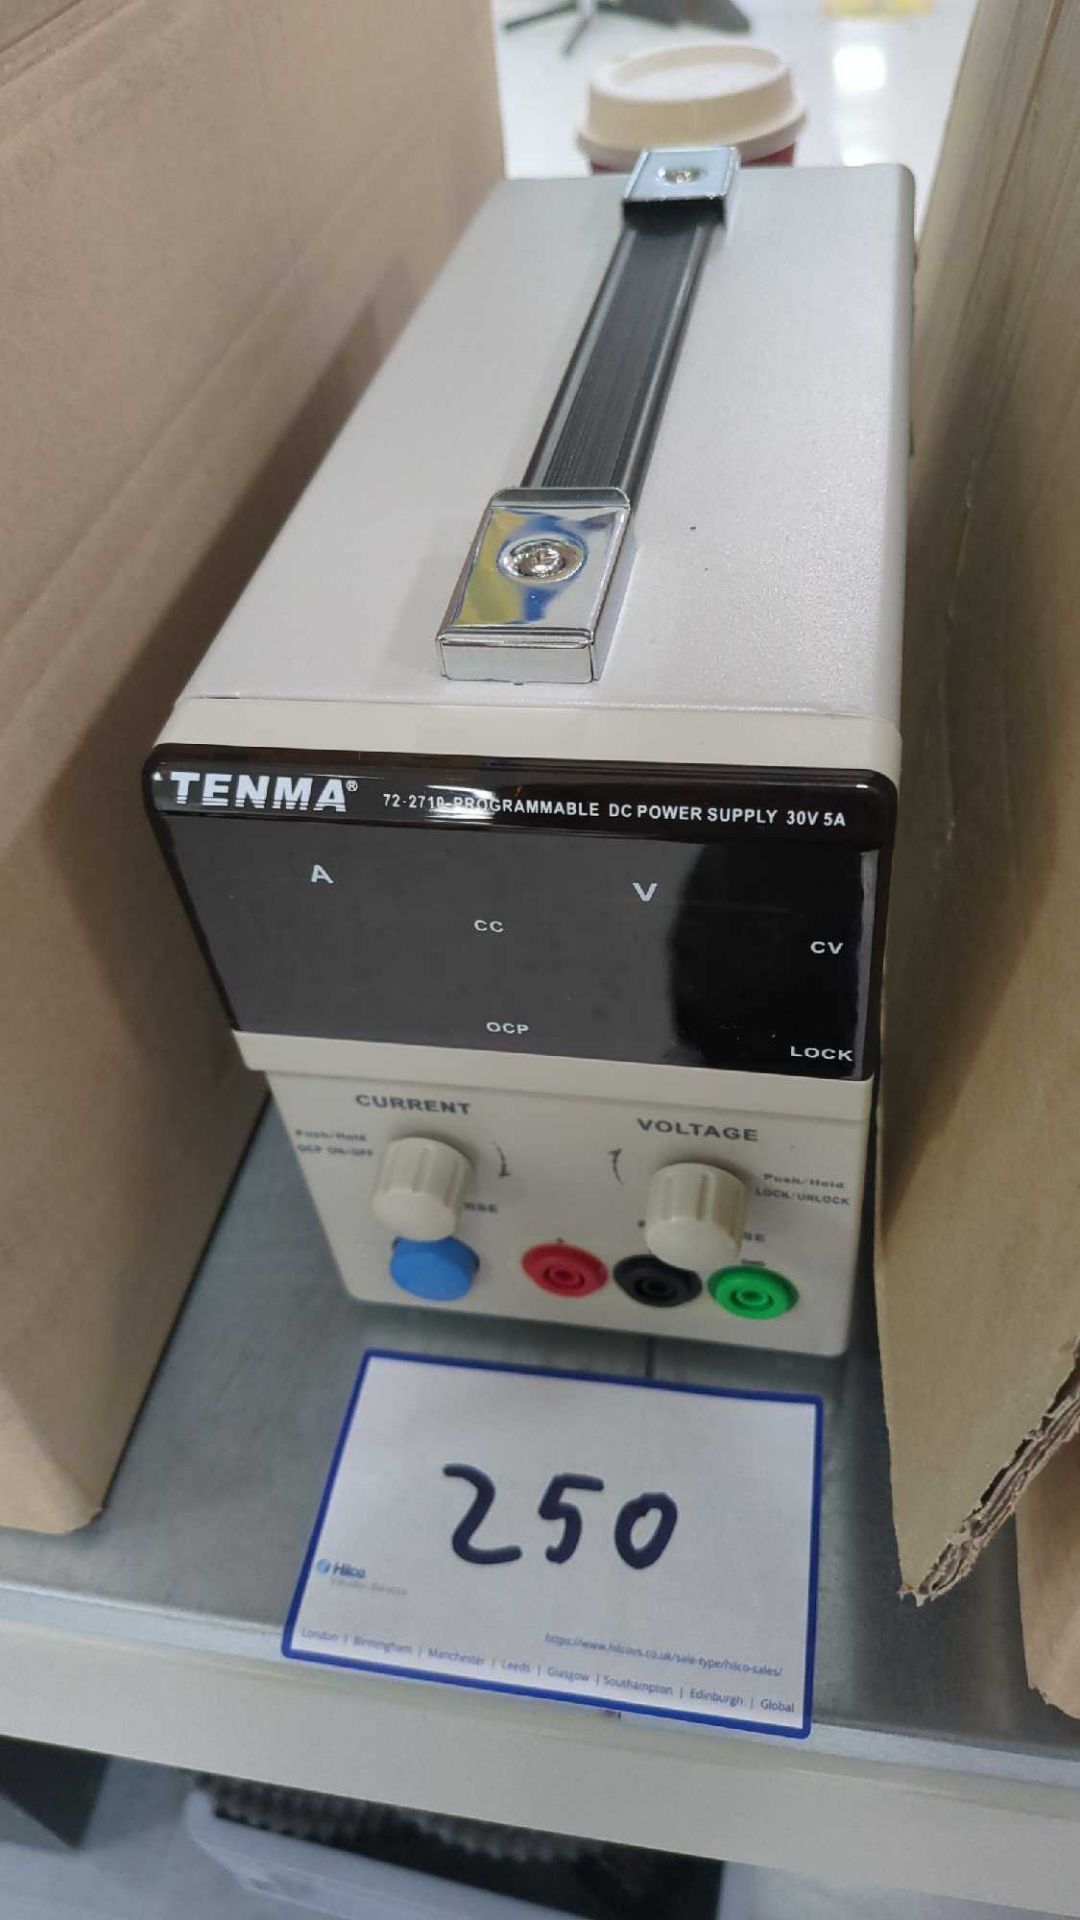 Tenma power supply unit